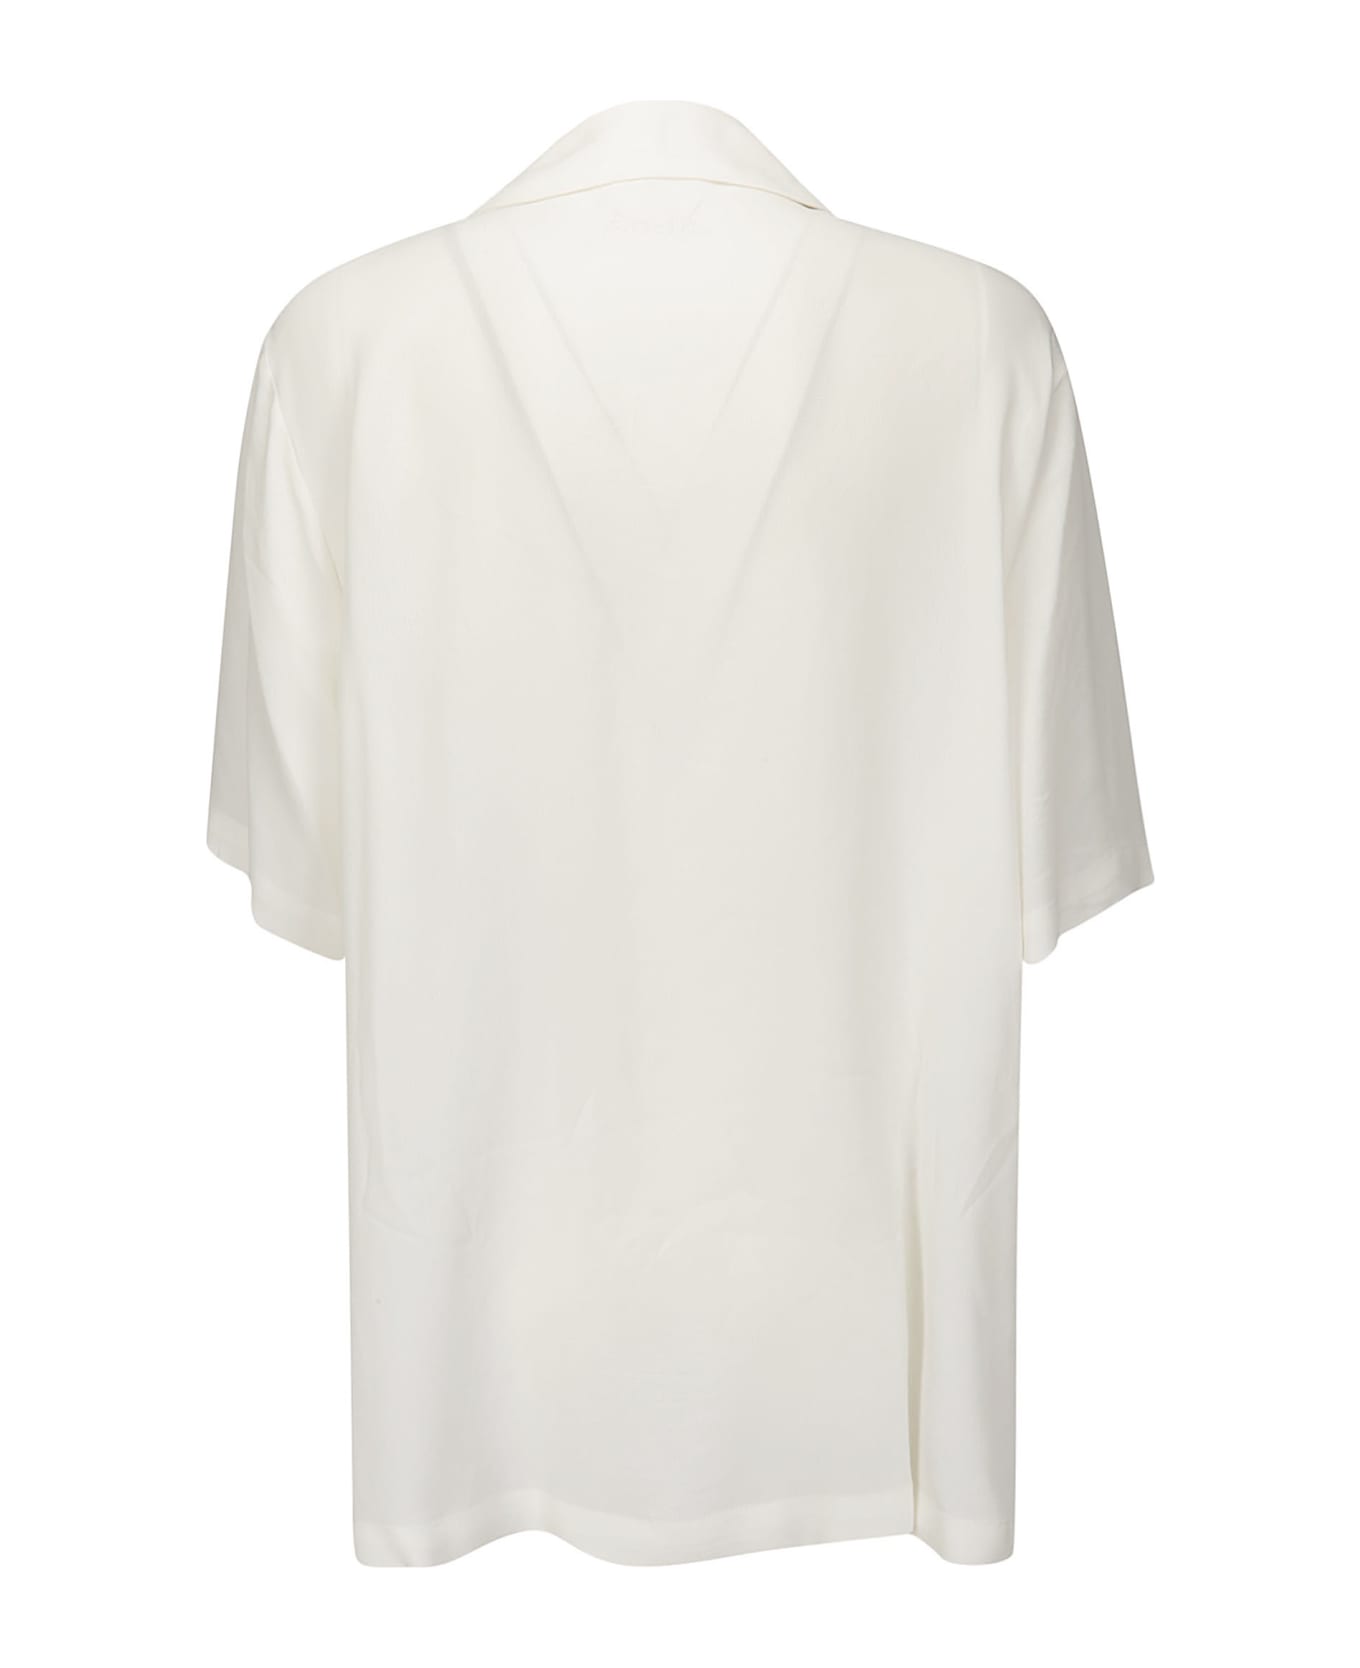 Parosh Shirt - WHITE